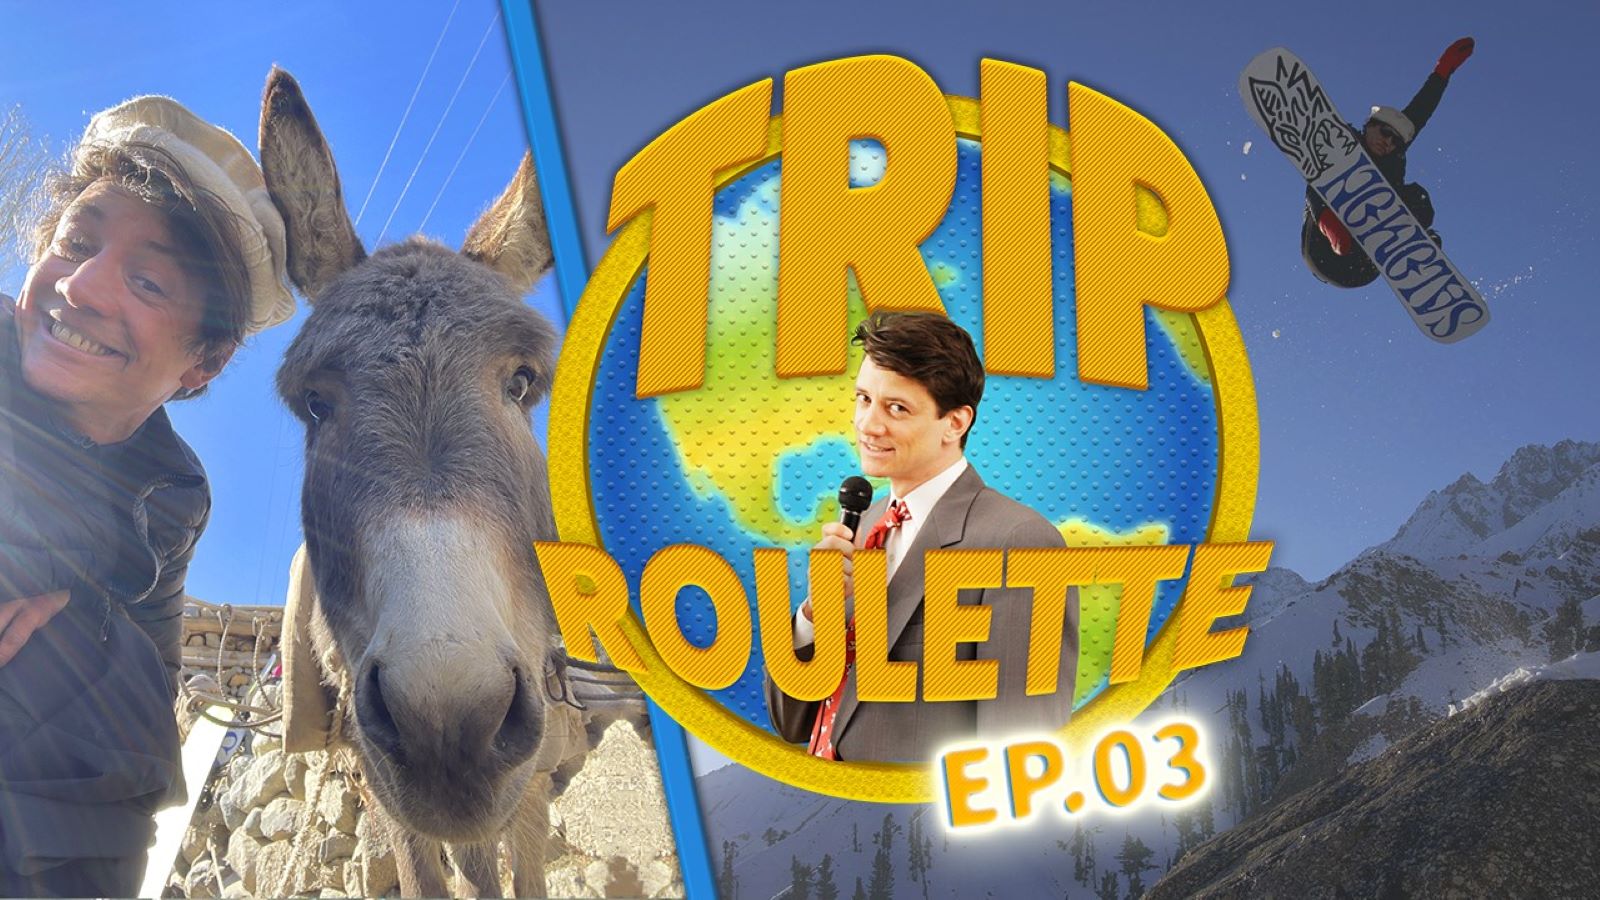 Trip Roulette ep3 header